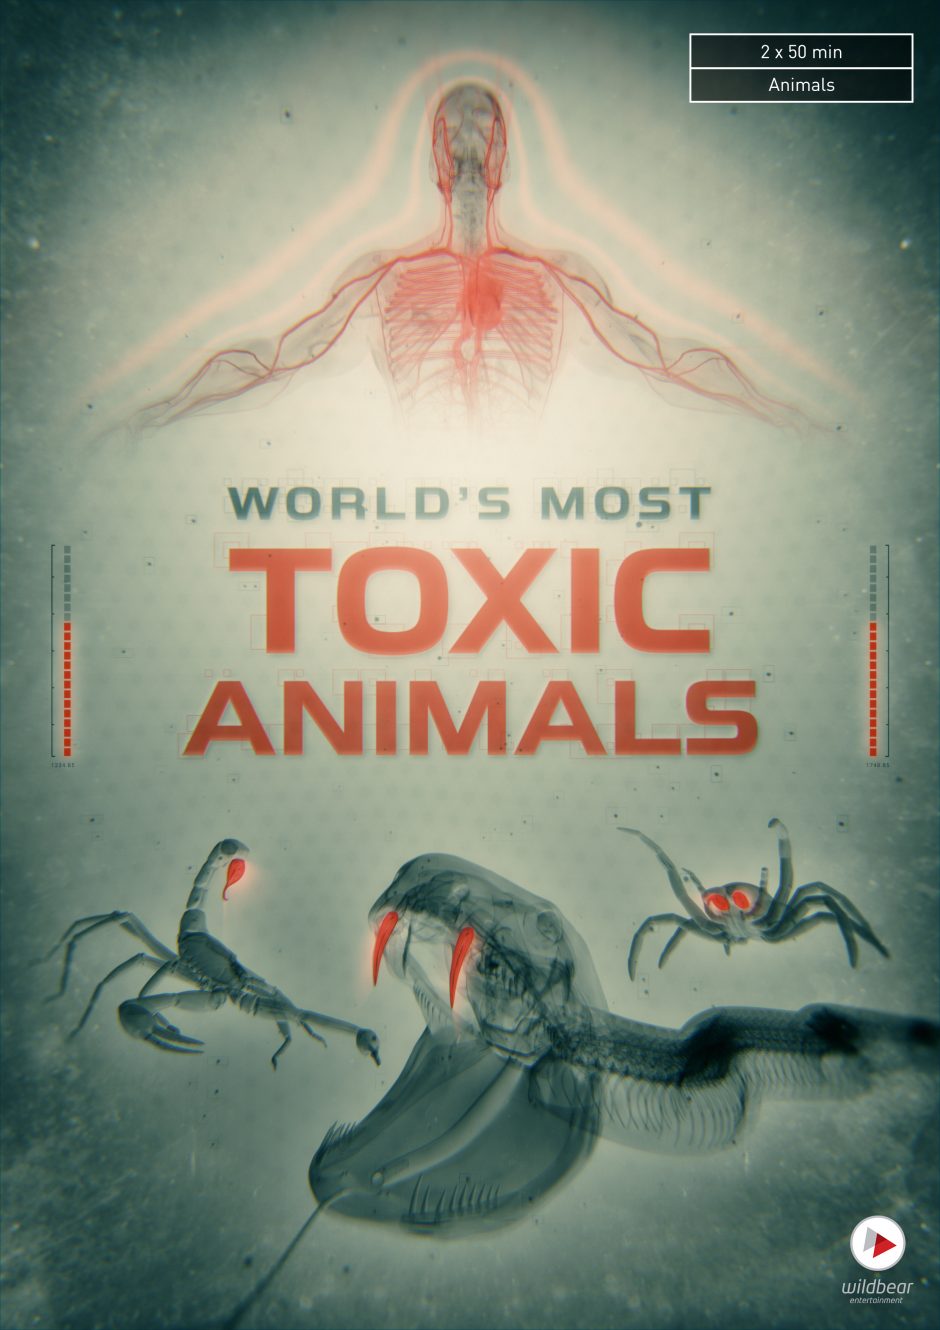 ToxicAnimals_Poster_01